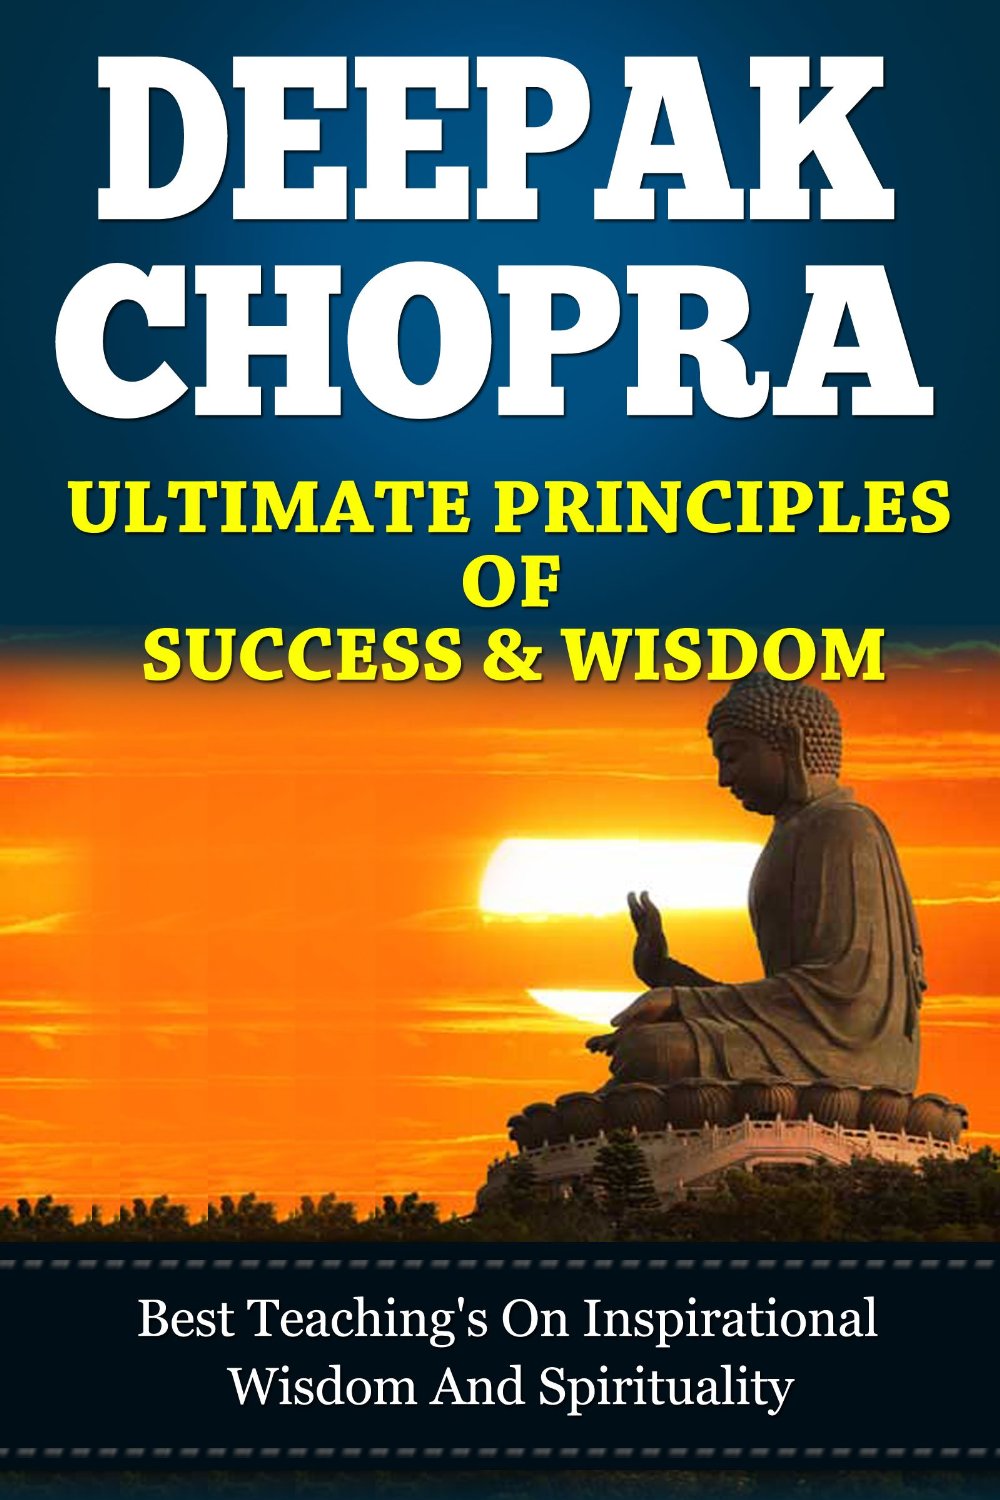 Deepak Chopra’s Ultimate Principles Of Success & Wisdom by Kathryn Sandberg